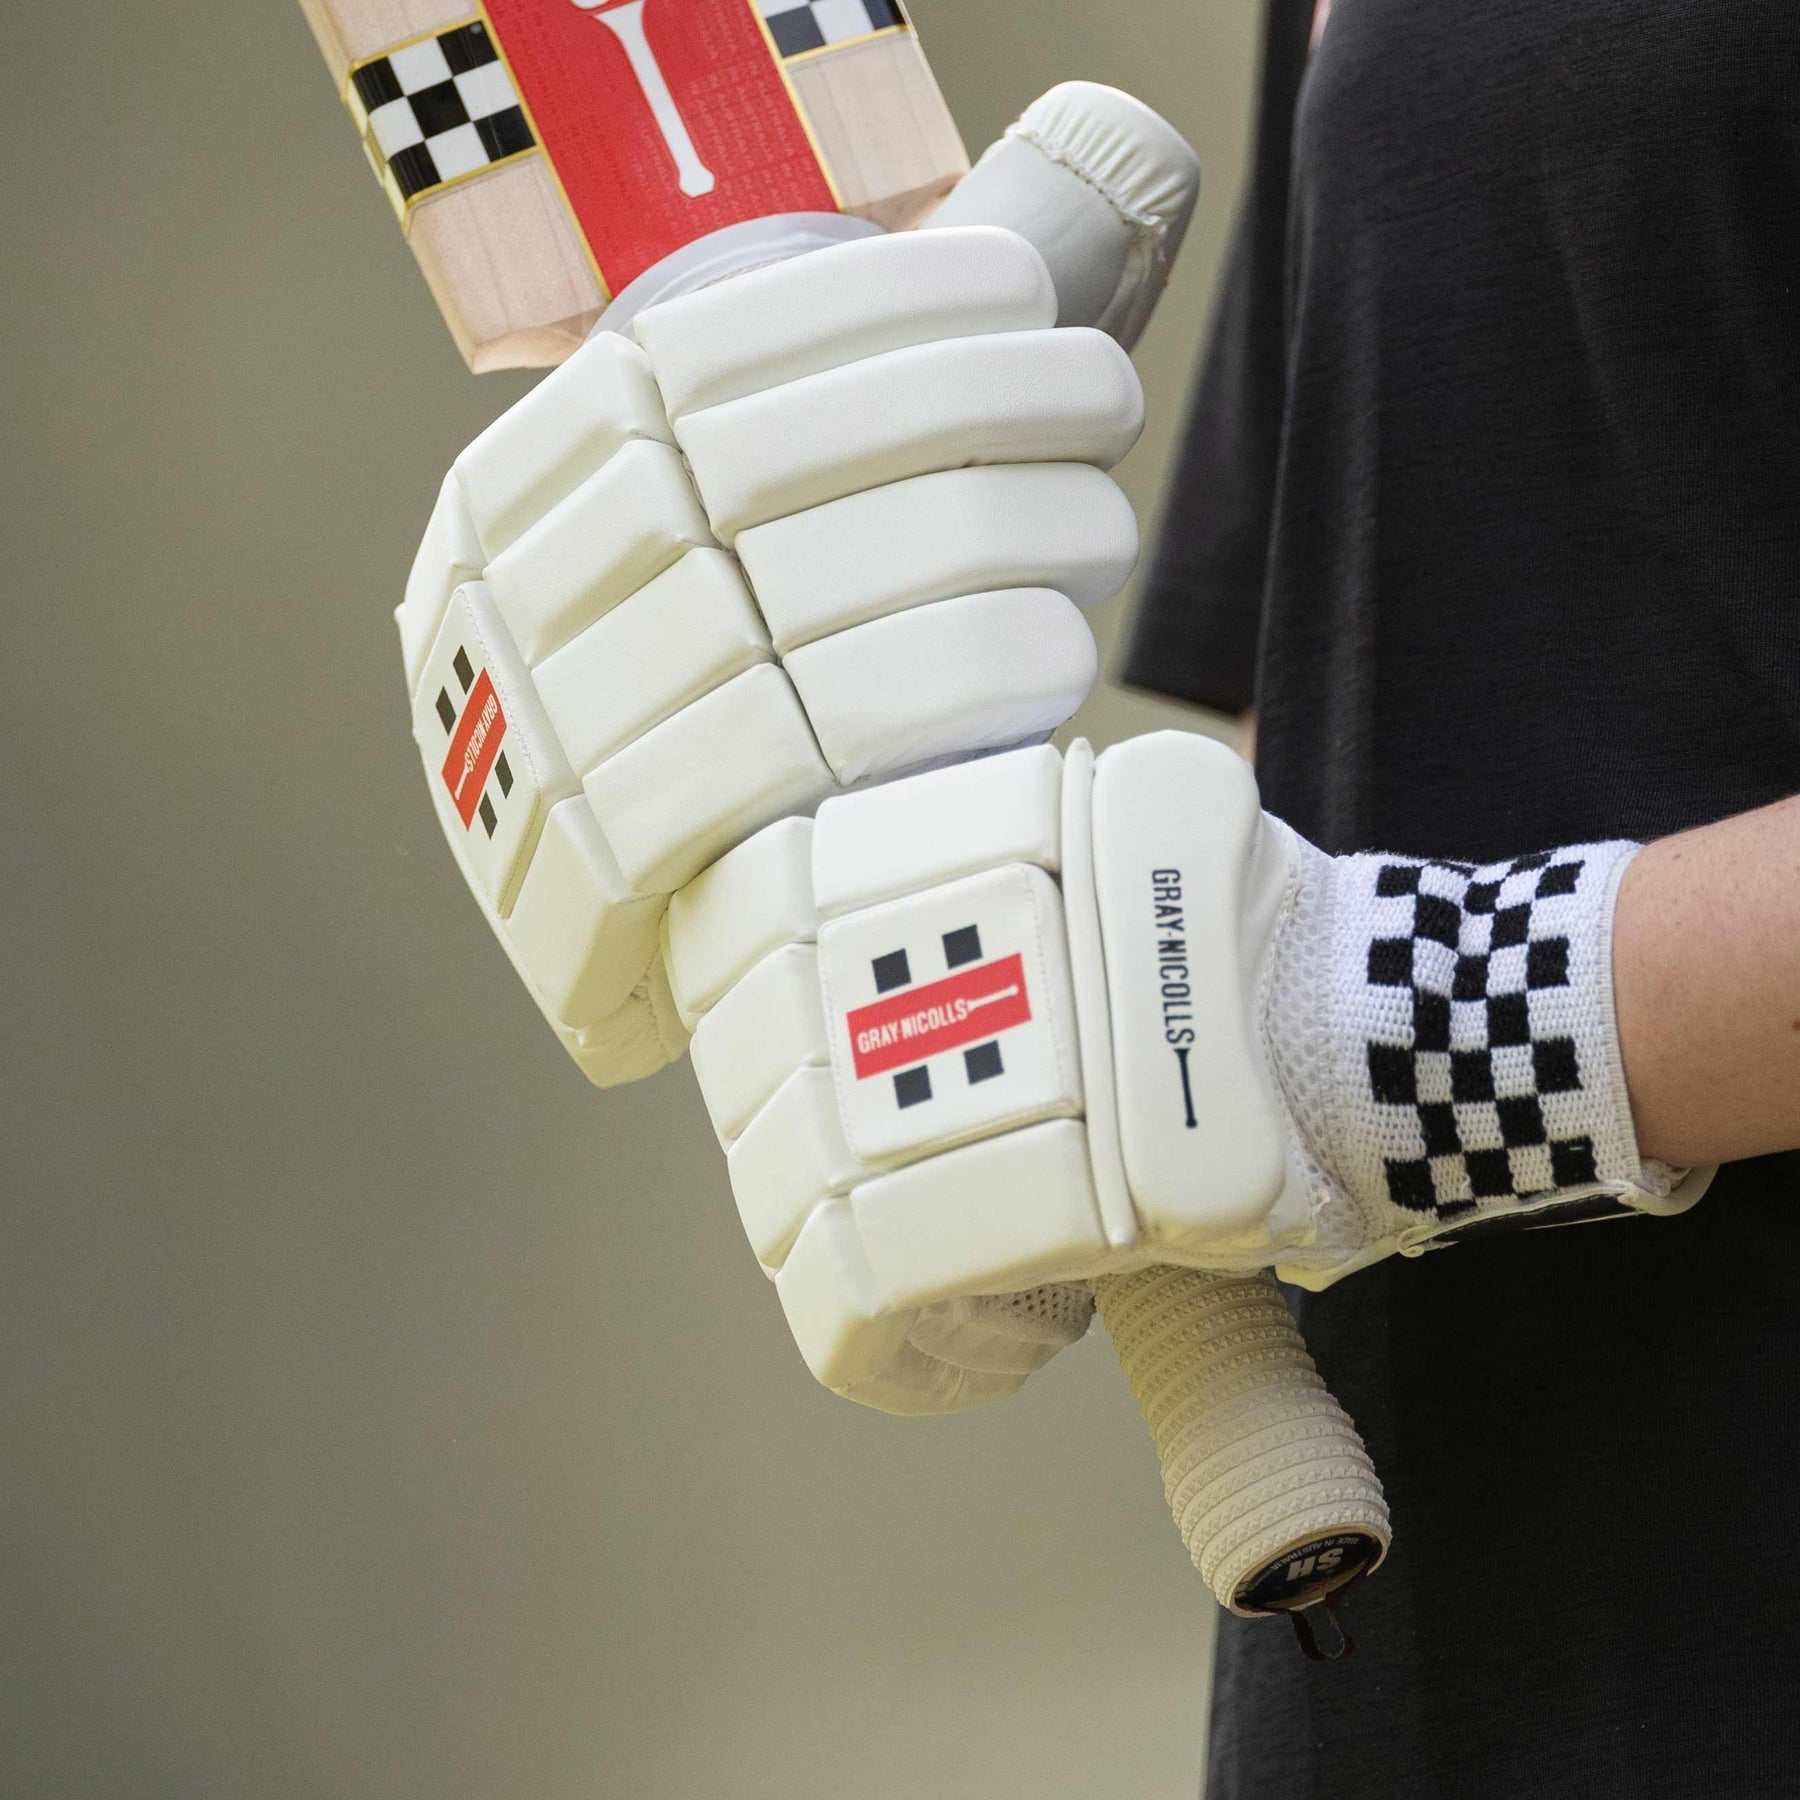 Gray-Nicolls Prestige Cricket Batting Gloves